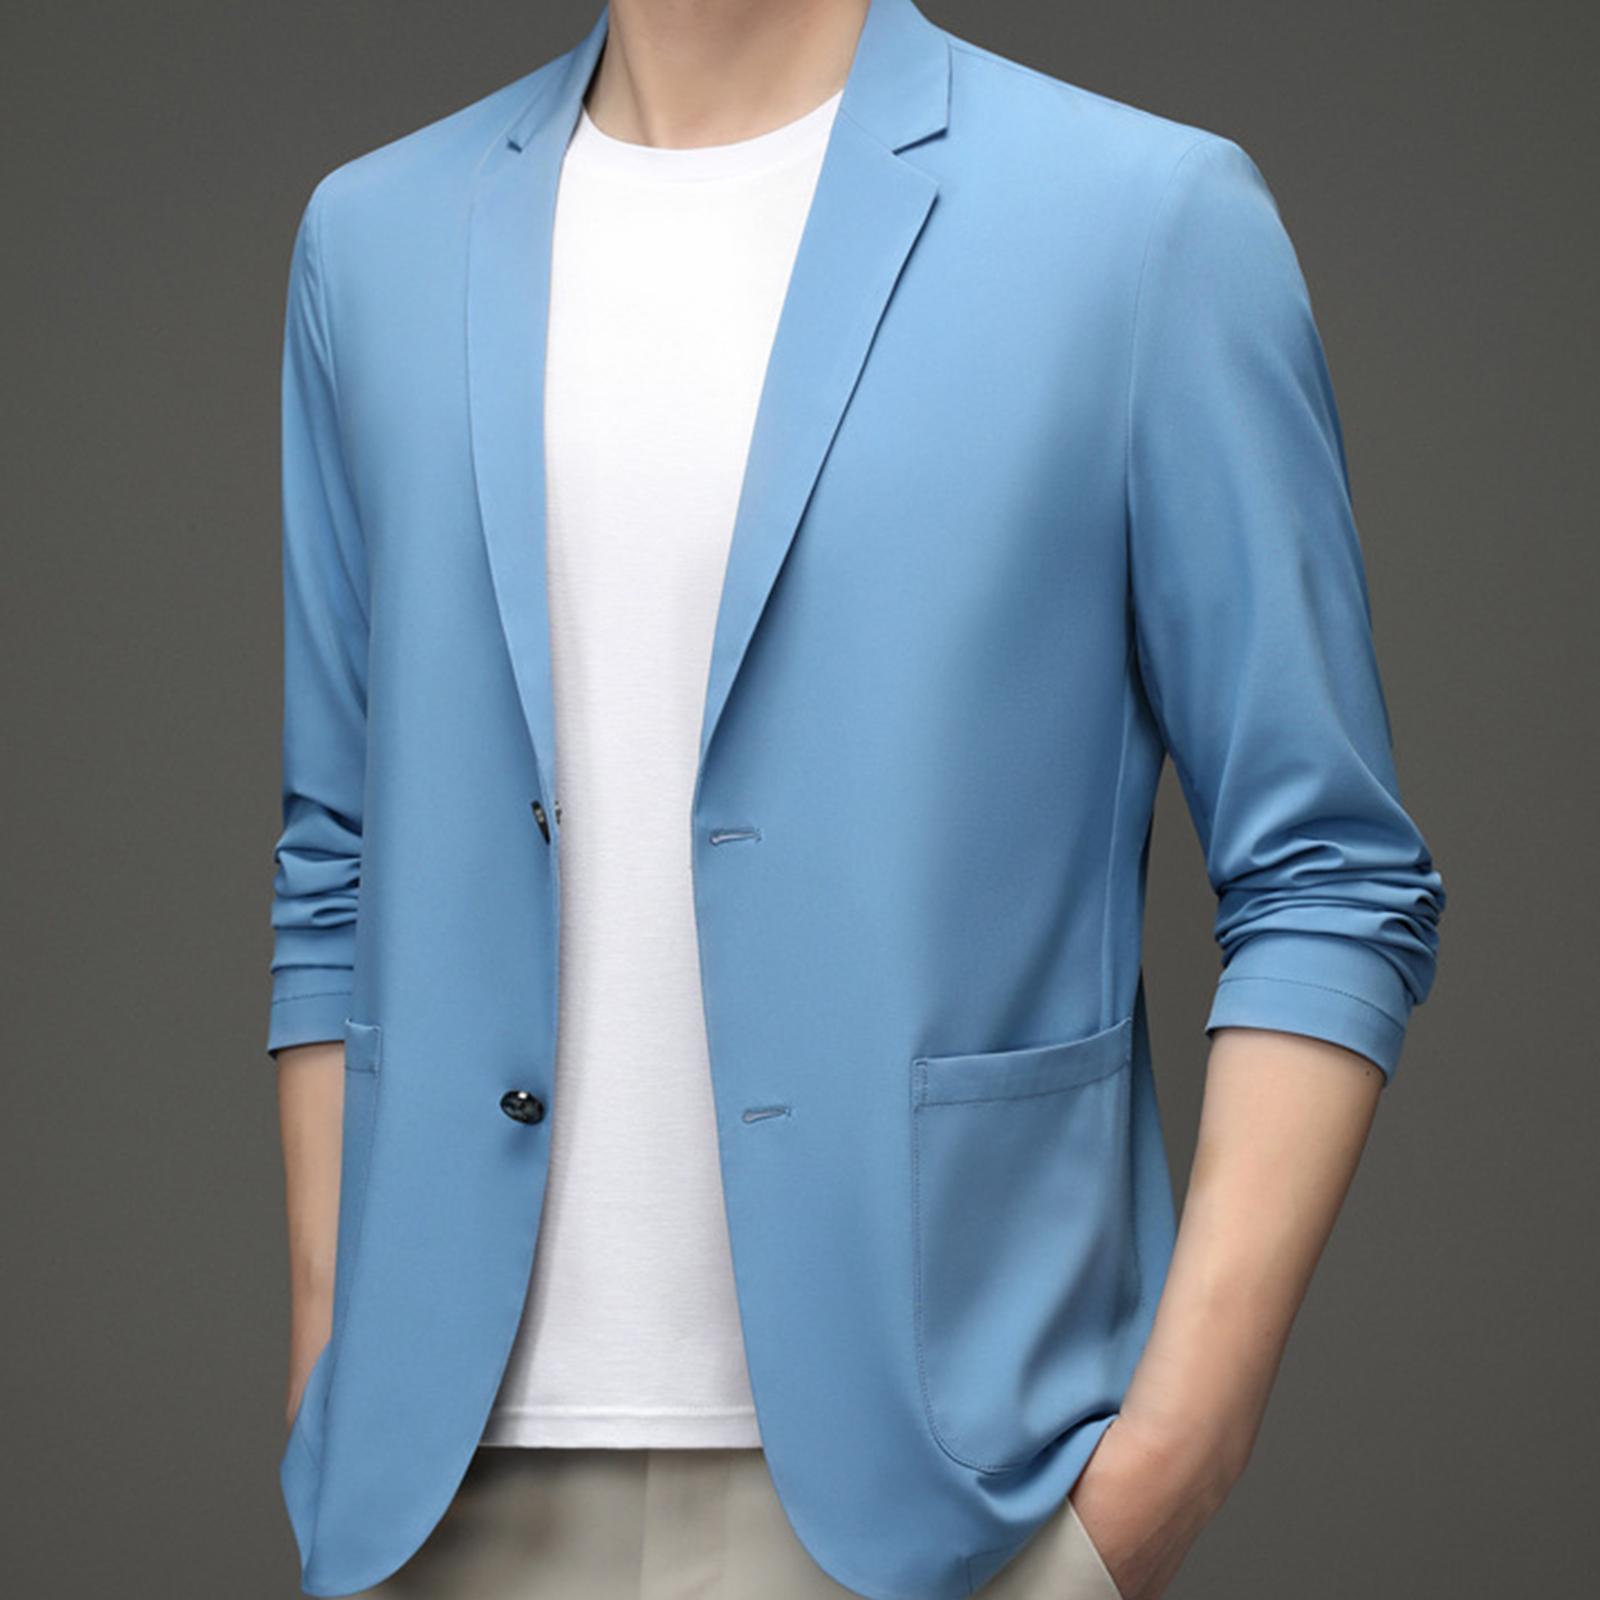 Suit Jacket Men Fashion Suit Blazer Men for Holidays Office Gift Blue Color L